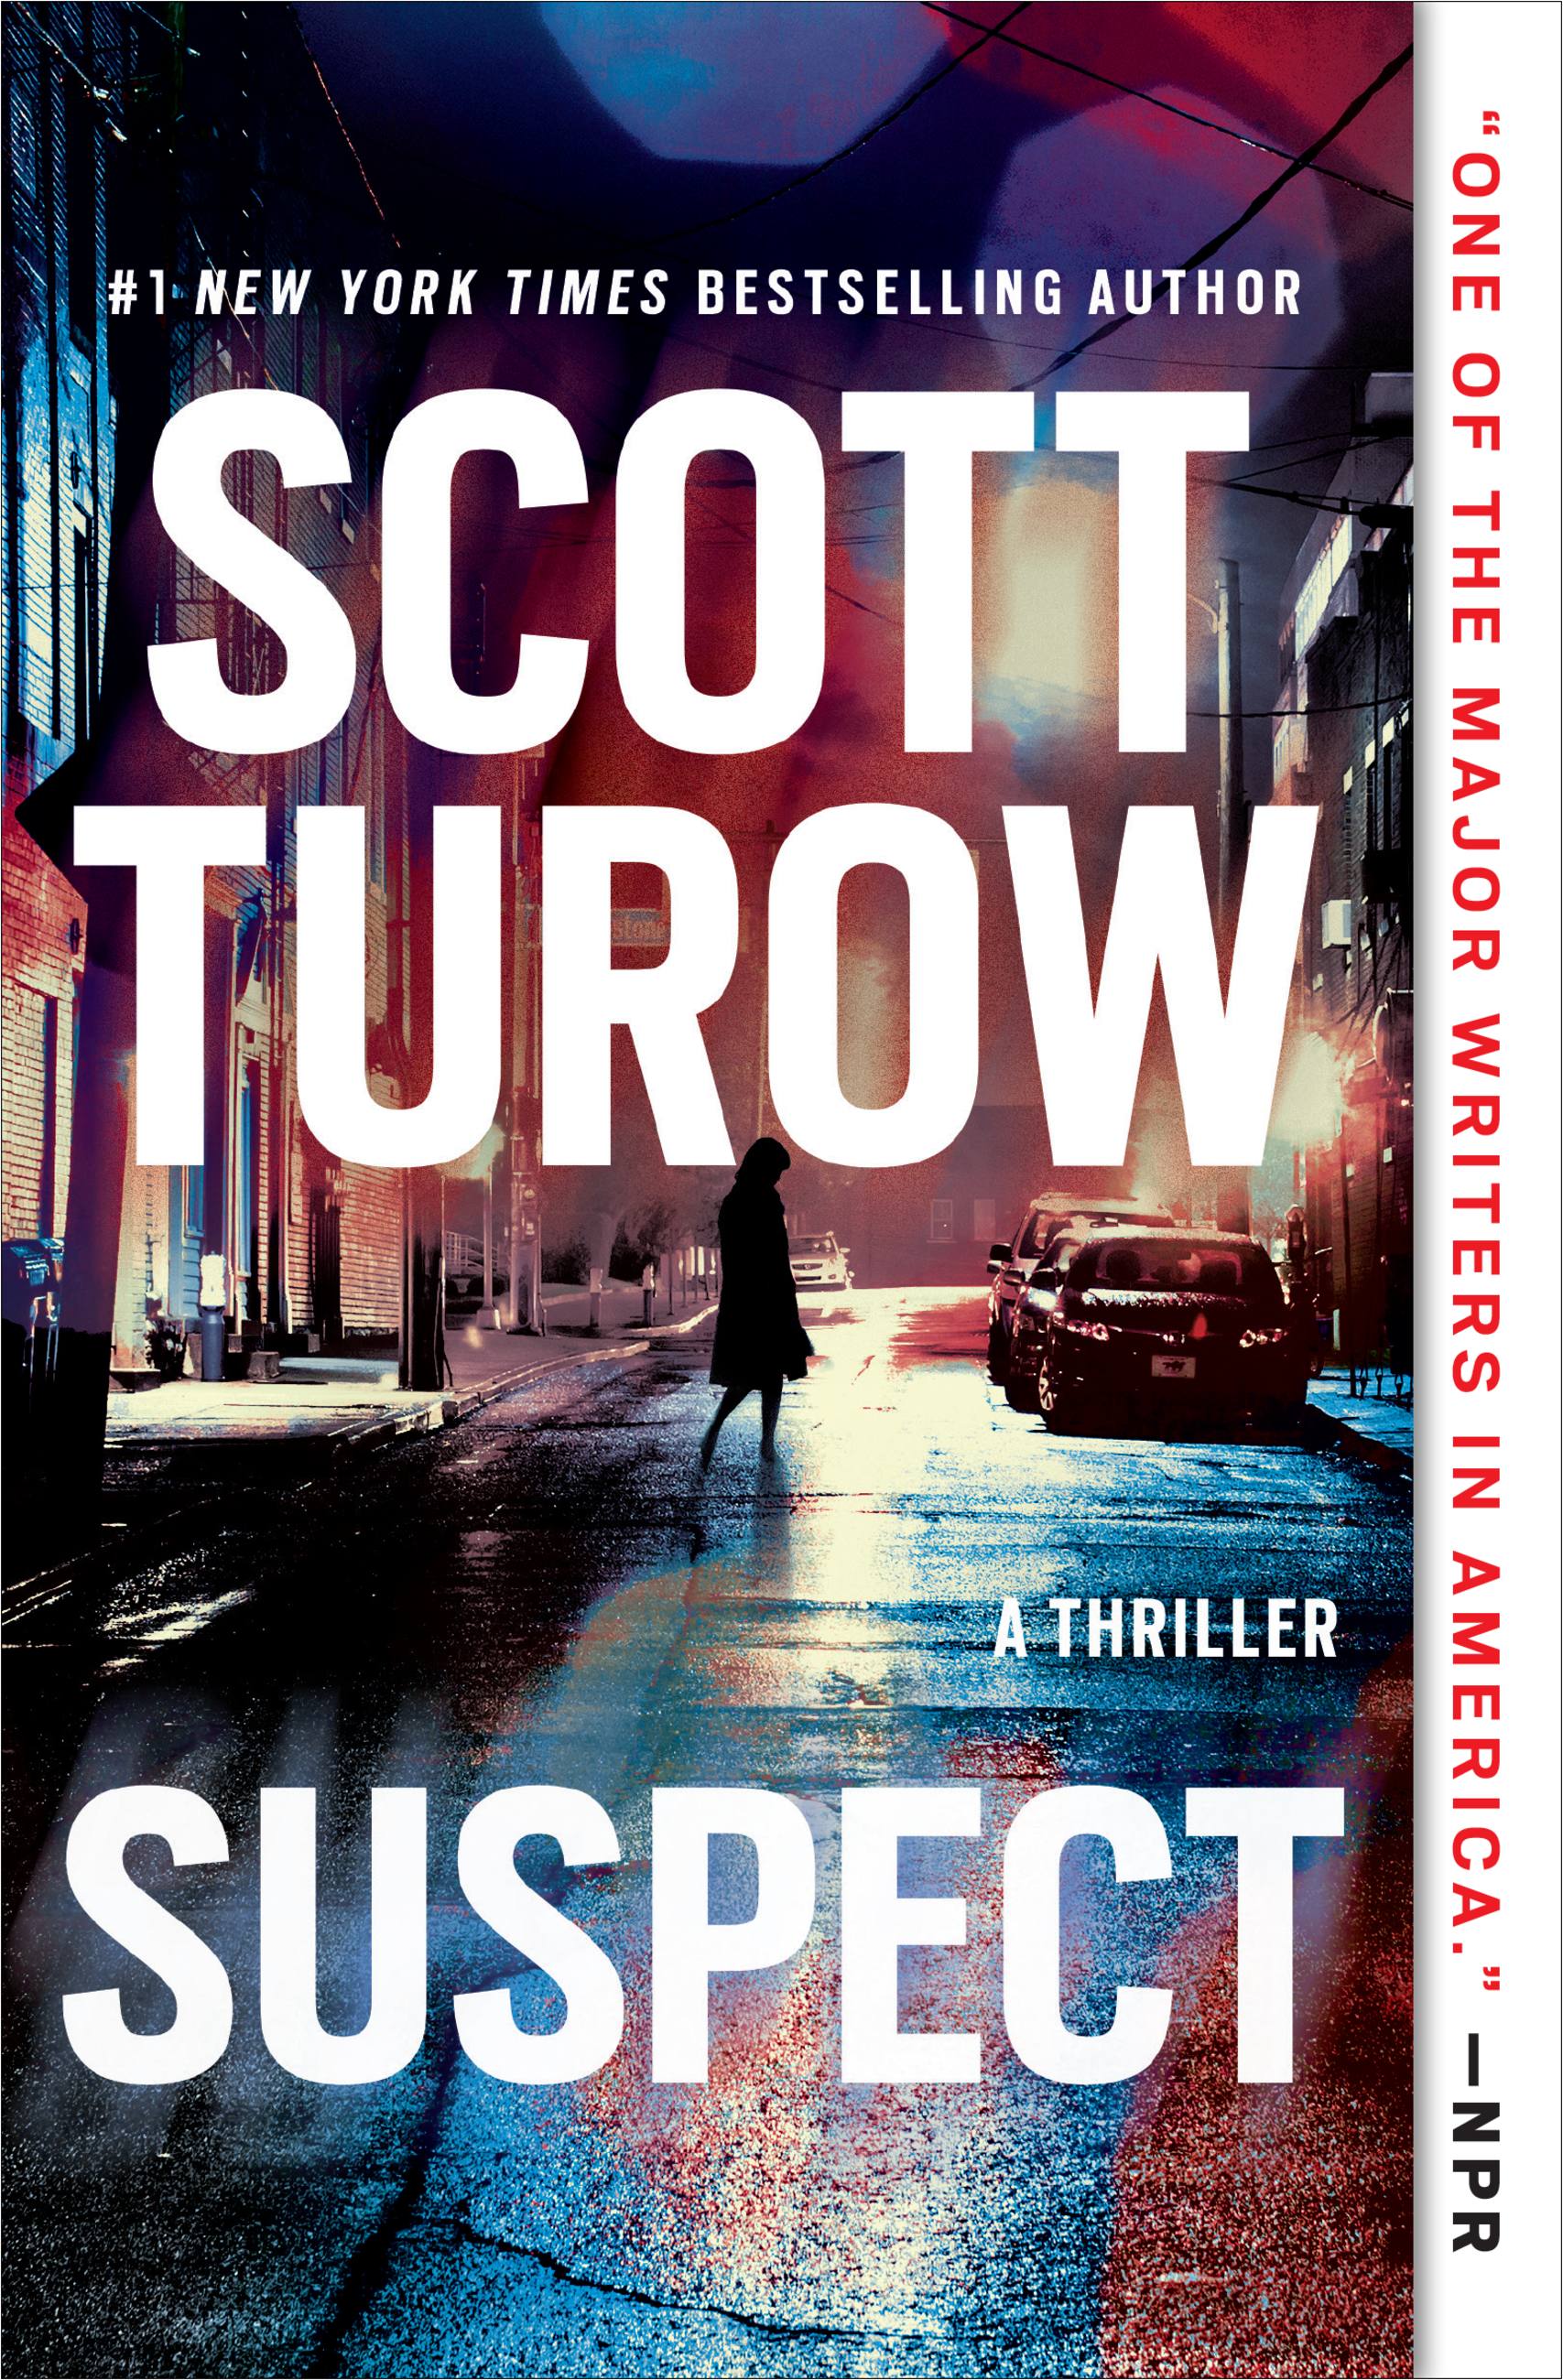 Scott　Turow　Book　Hachette　Group　Suspect　by